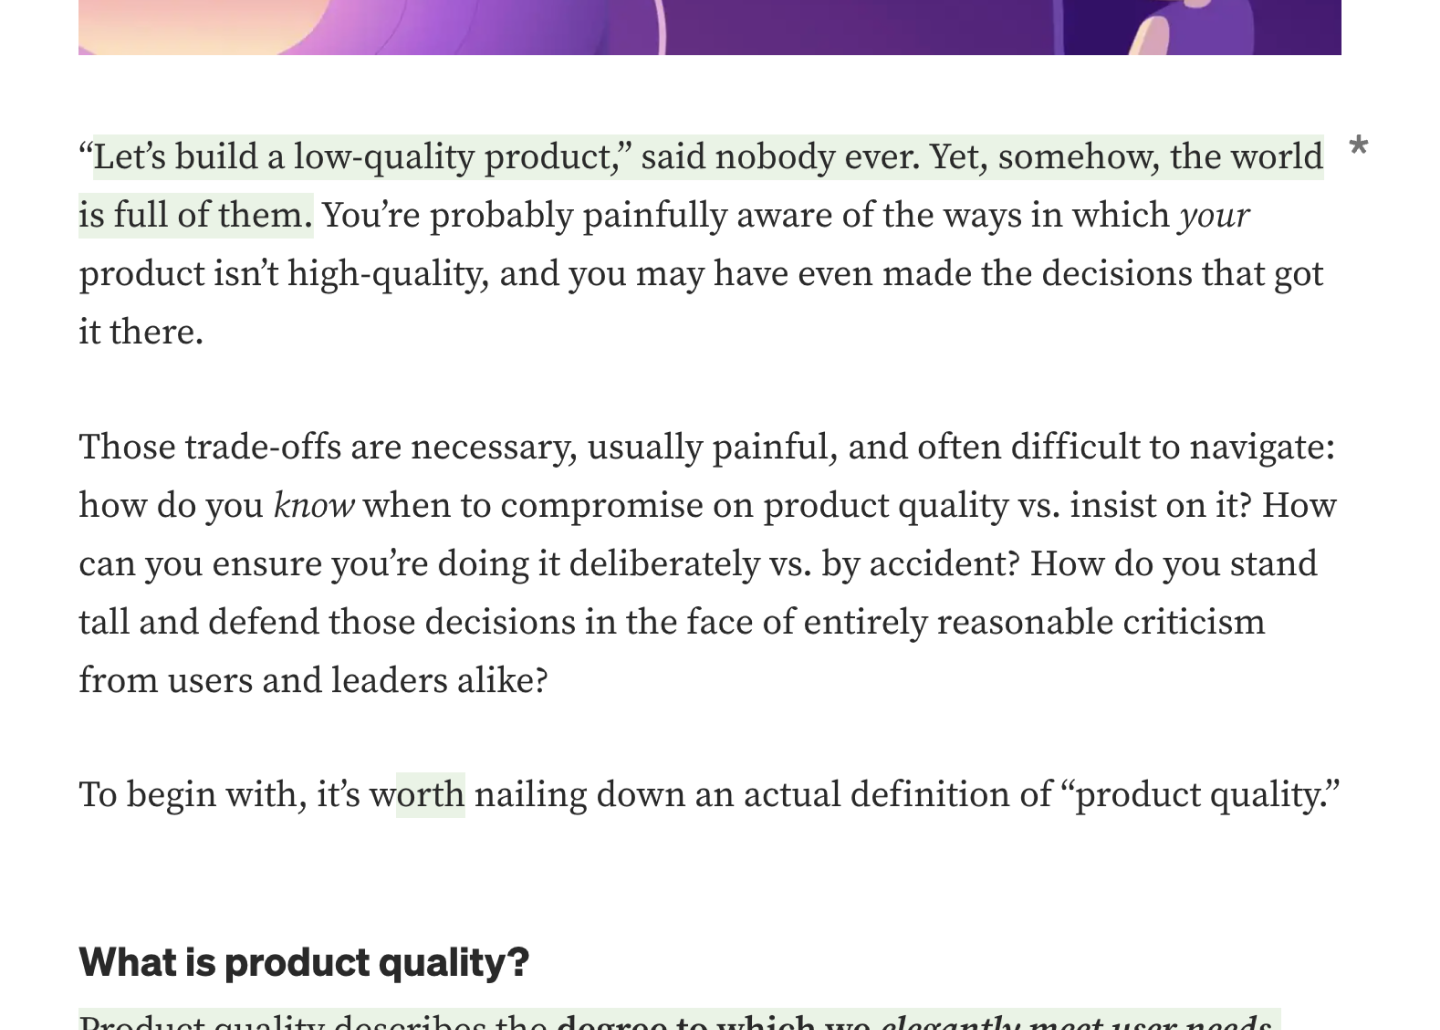 Blog post describing my product quality framework